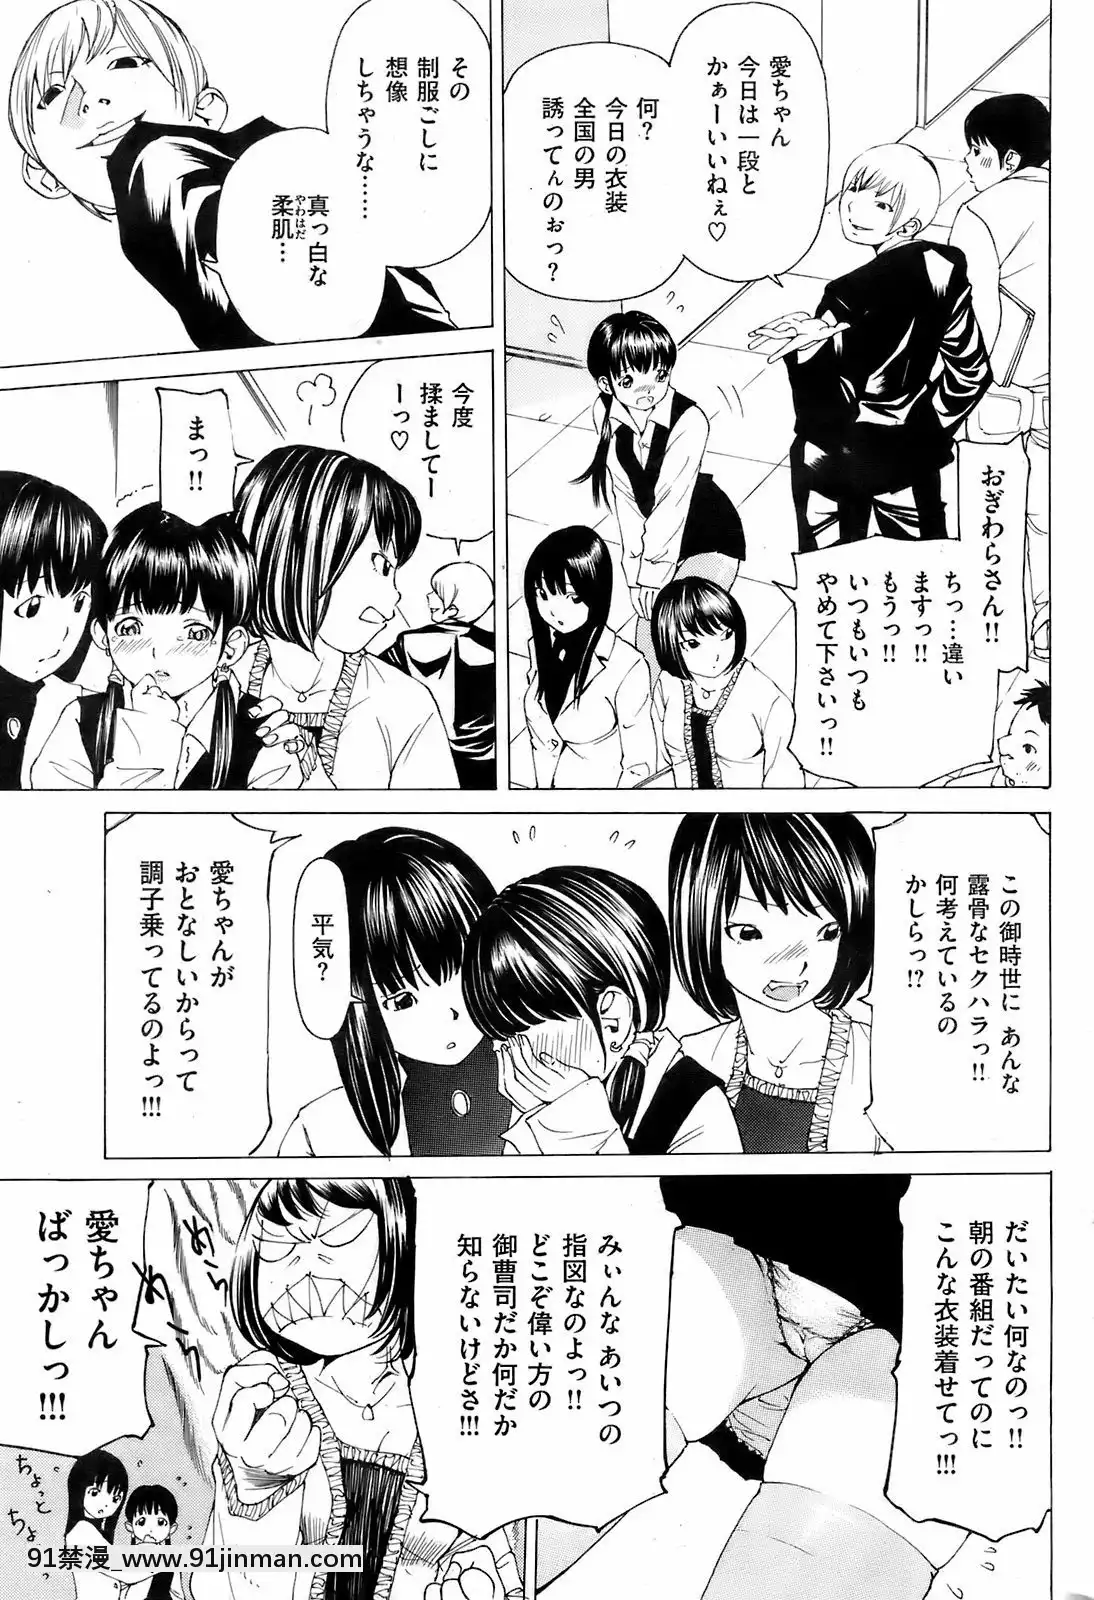 (Adult コミック) [雑志] COMIC Kuai La Tian số tháng 3 năm 2008【conan truyện tranh chap 1022】